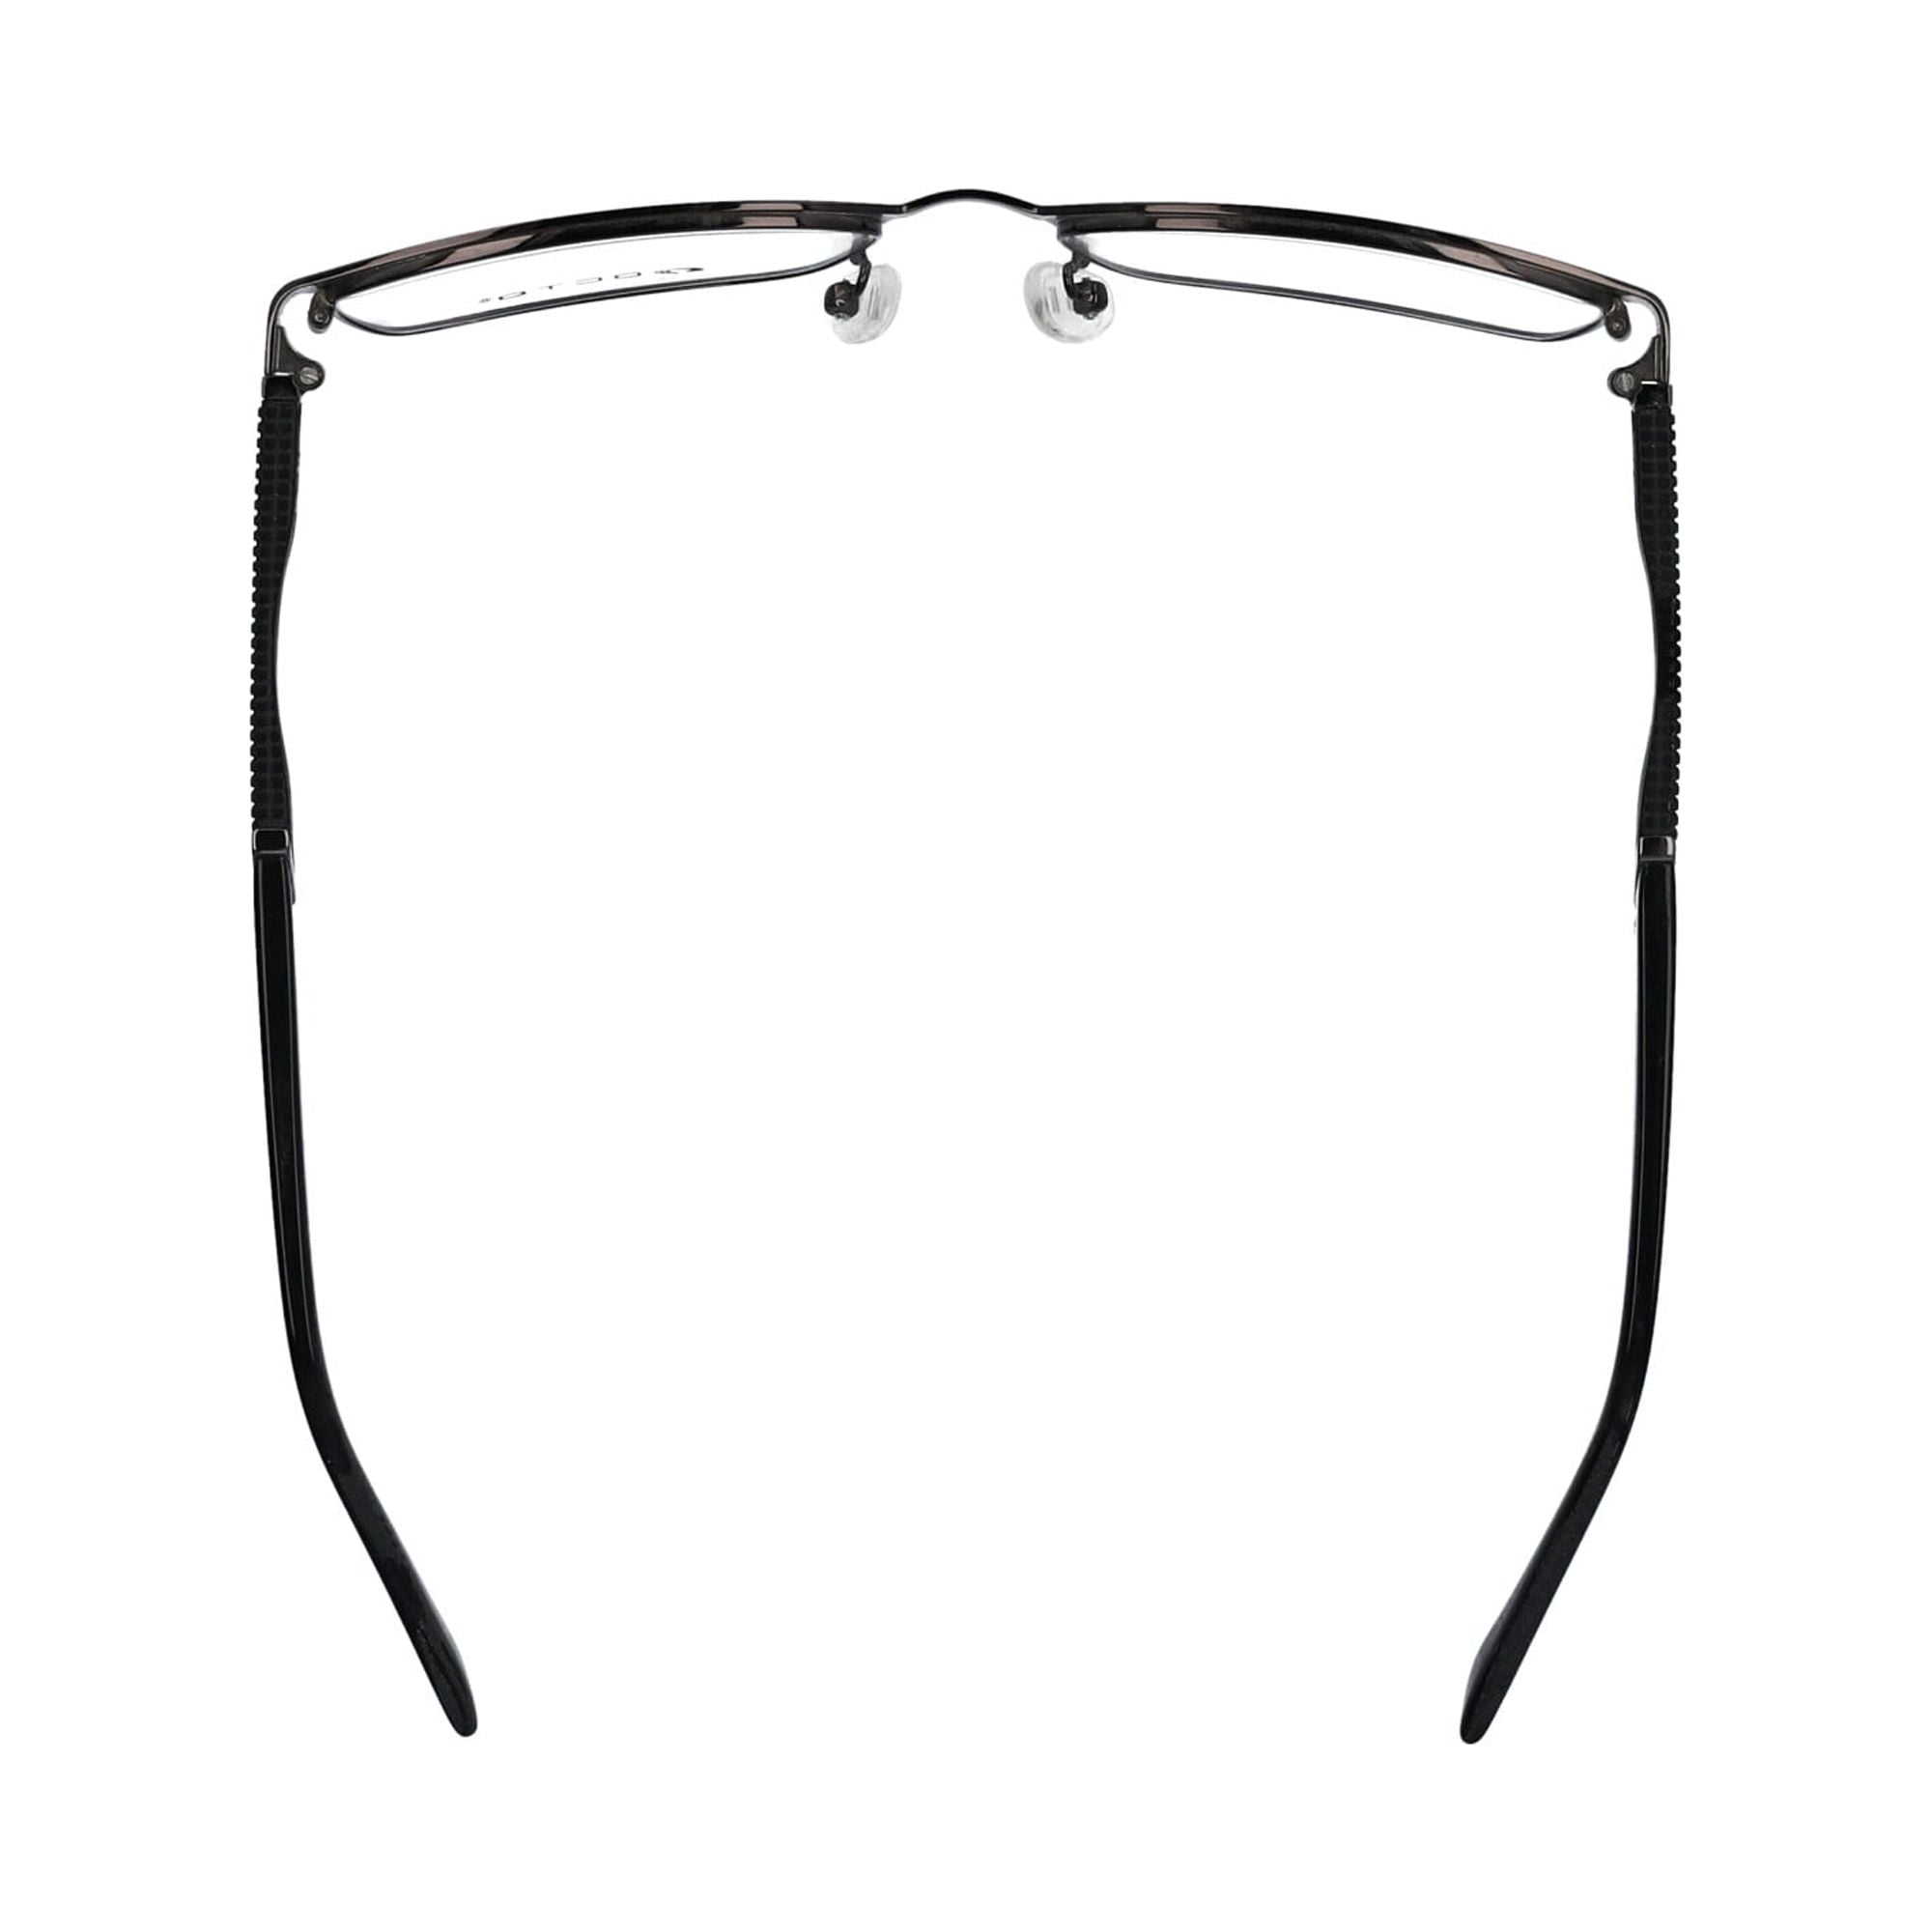 OCTO180 Respect Sport Eyeglass Frames - Walmart.com